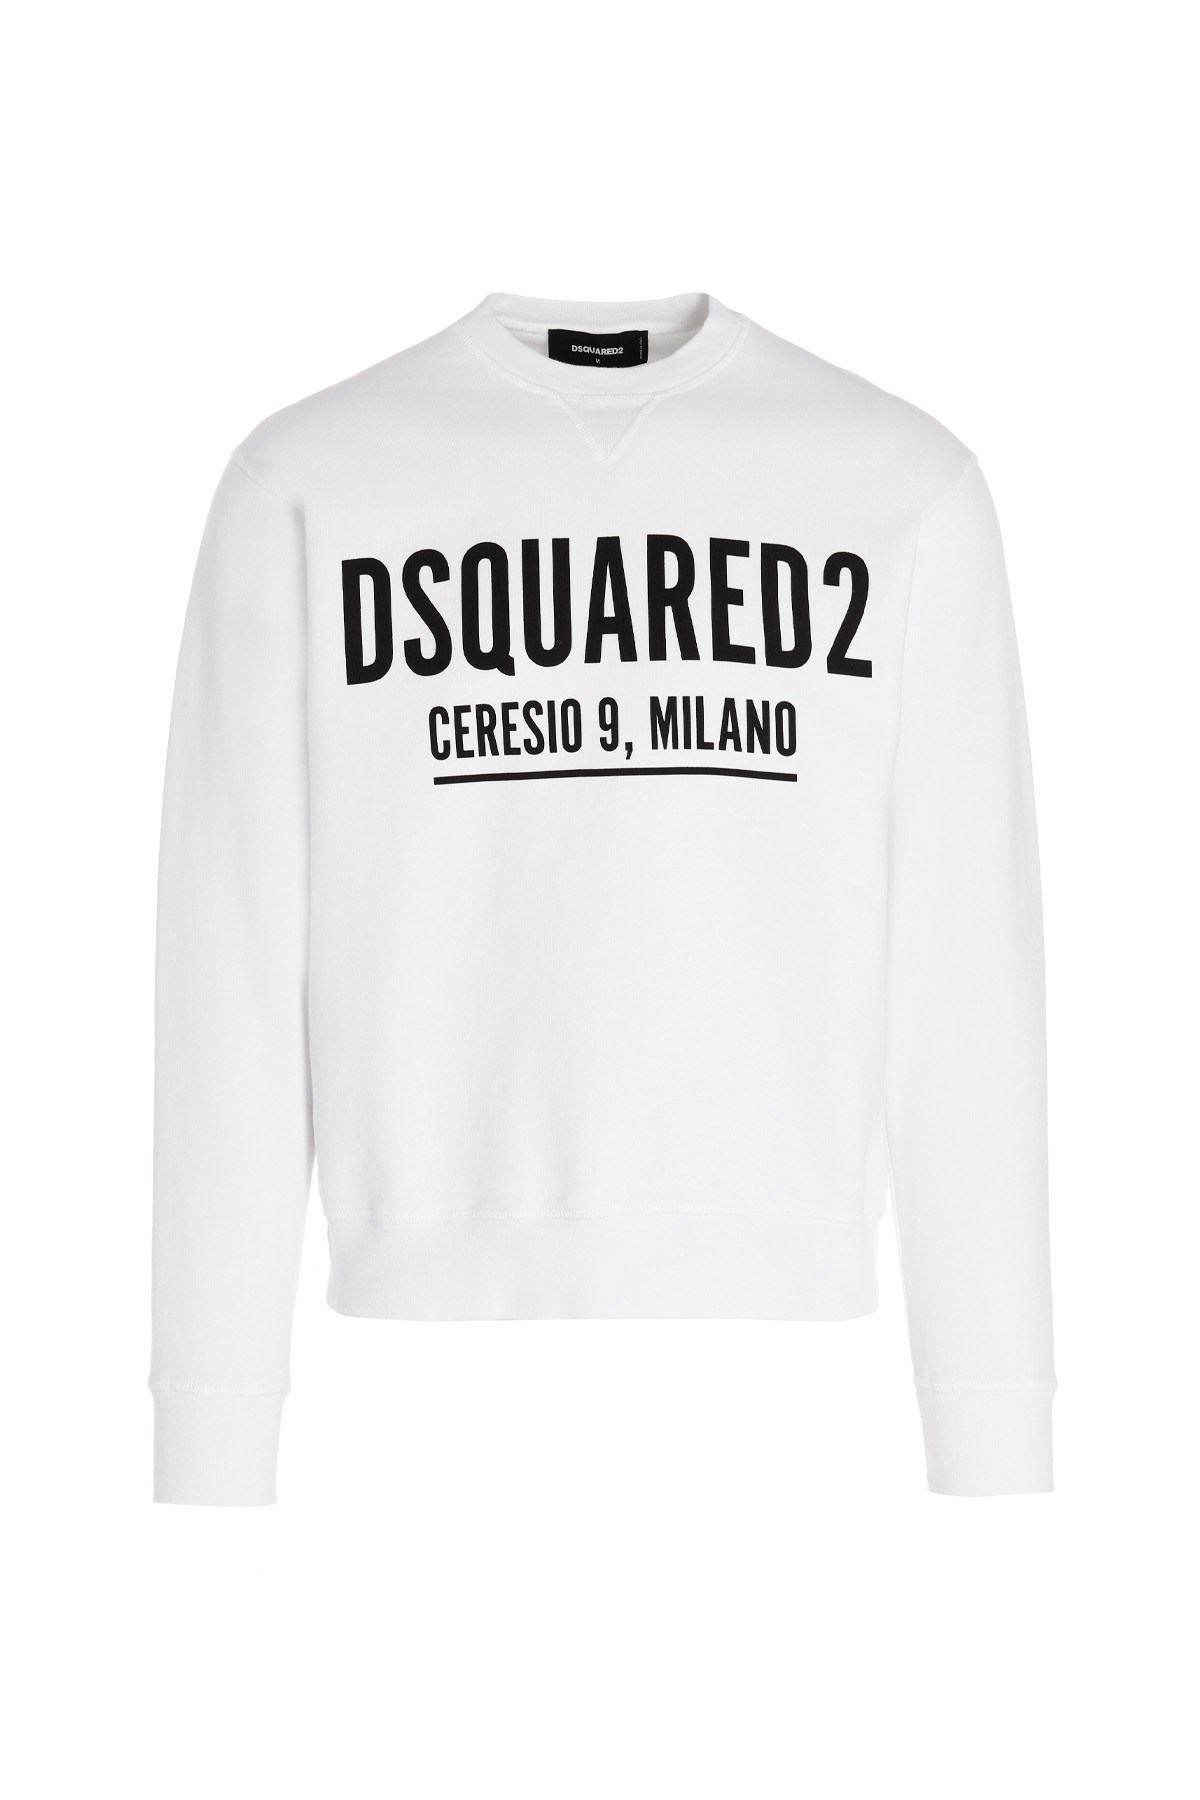 DSQUARED2 'Ceresio9’ Sweatshirt